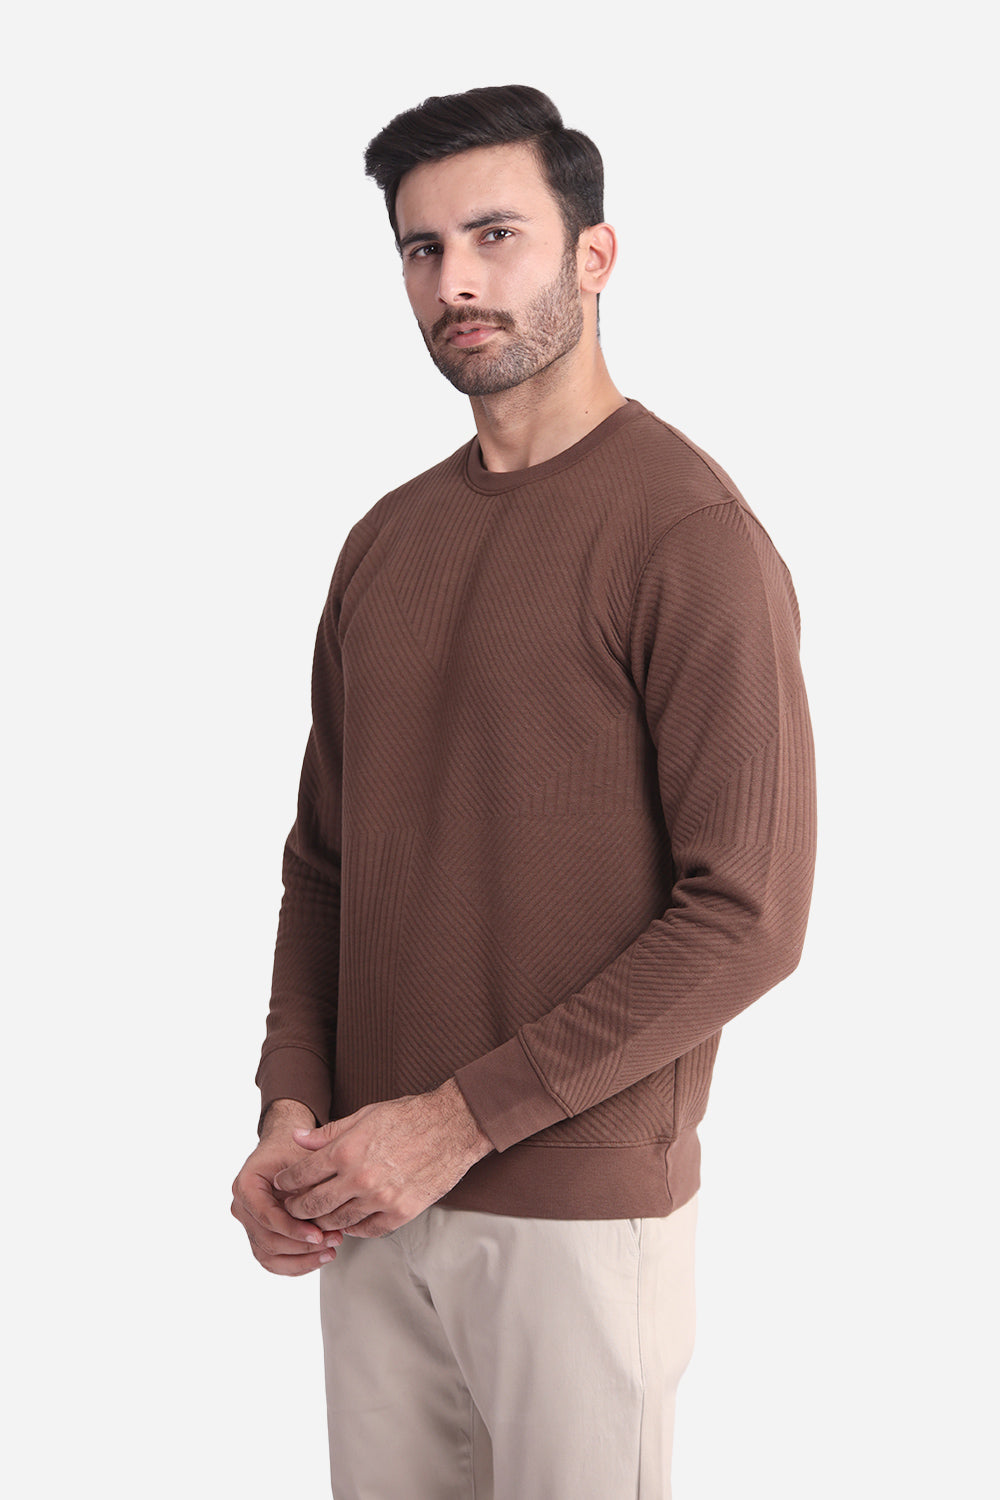 Dark Brown Sweatshirt